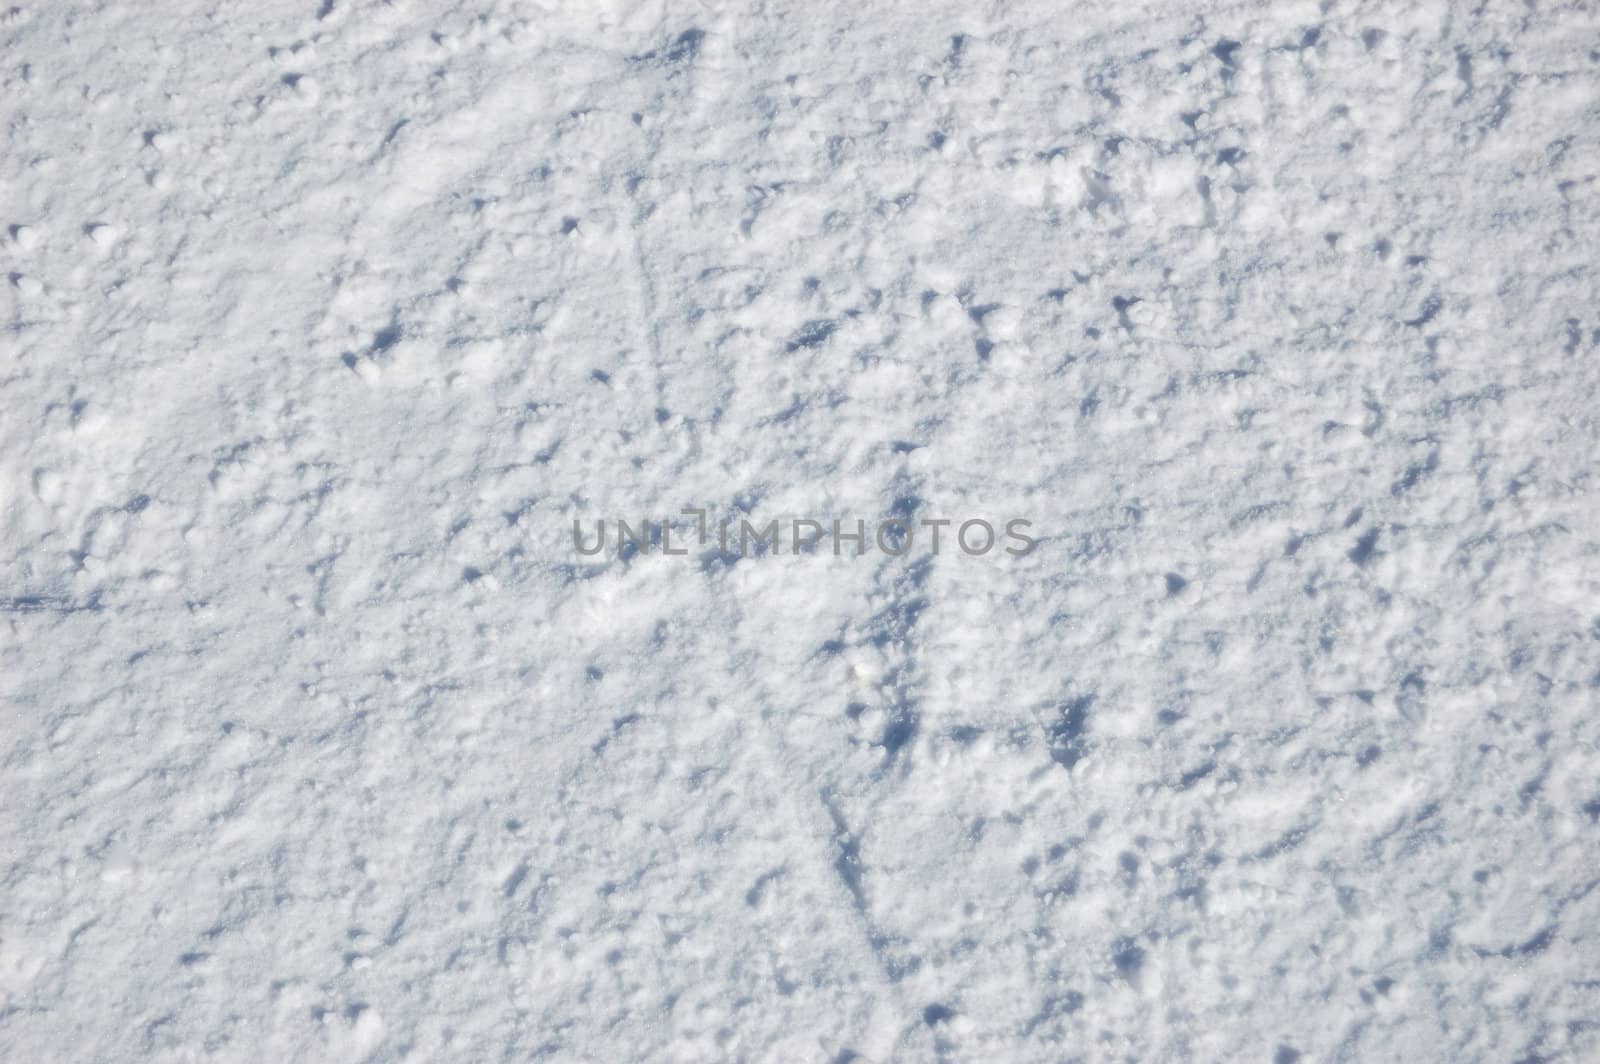 a nattural white snow texture